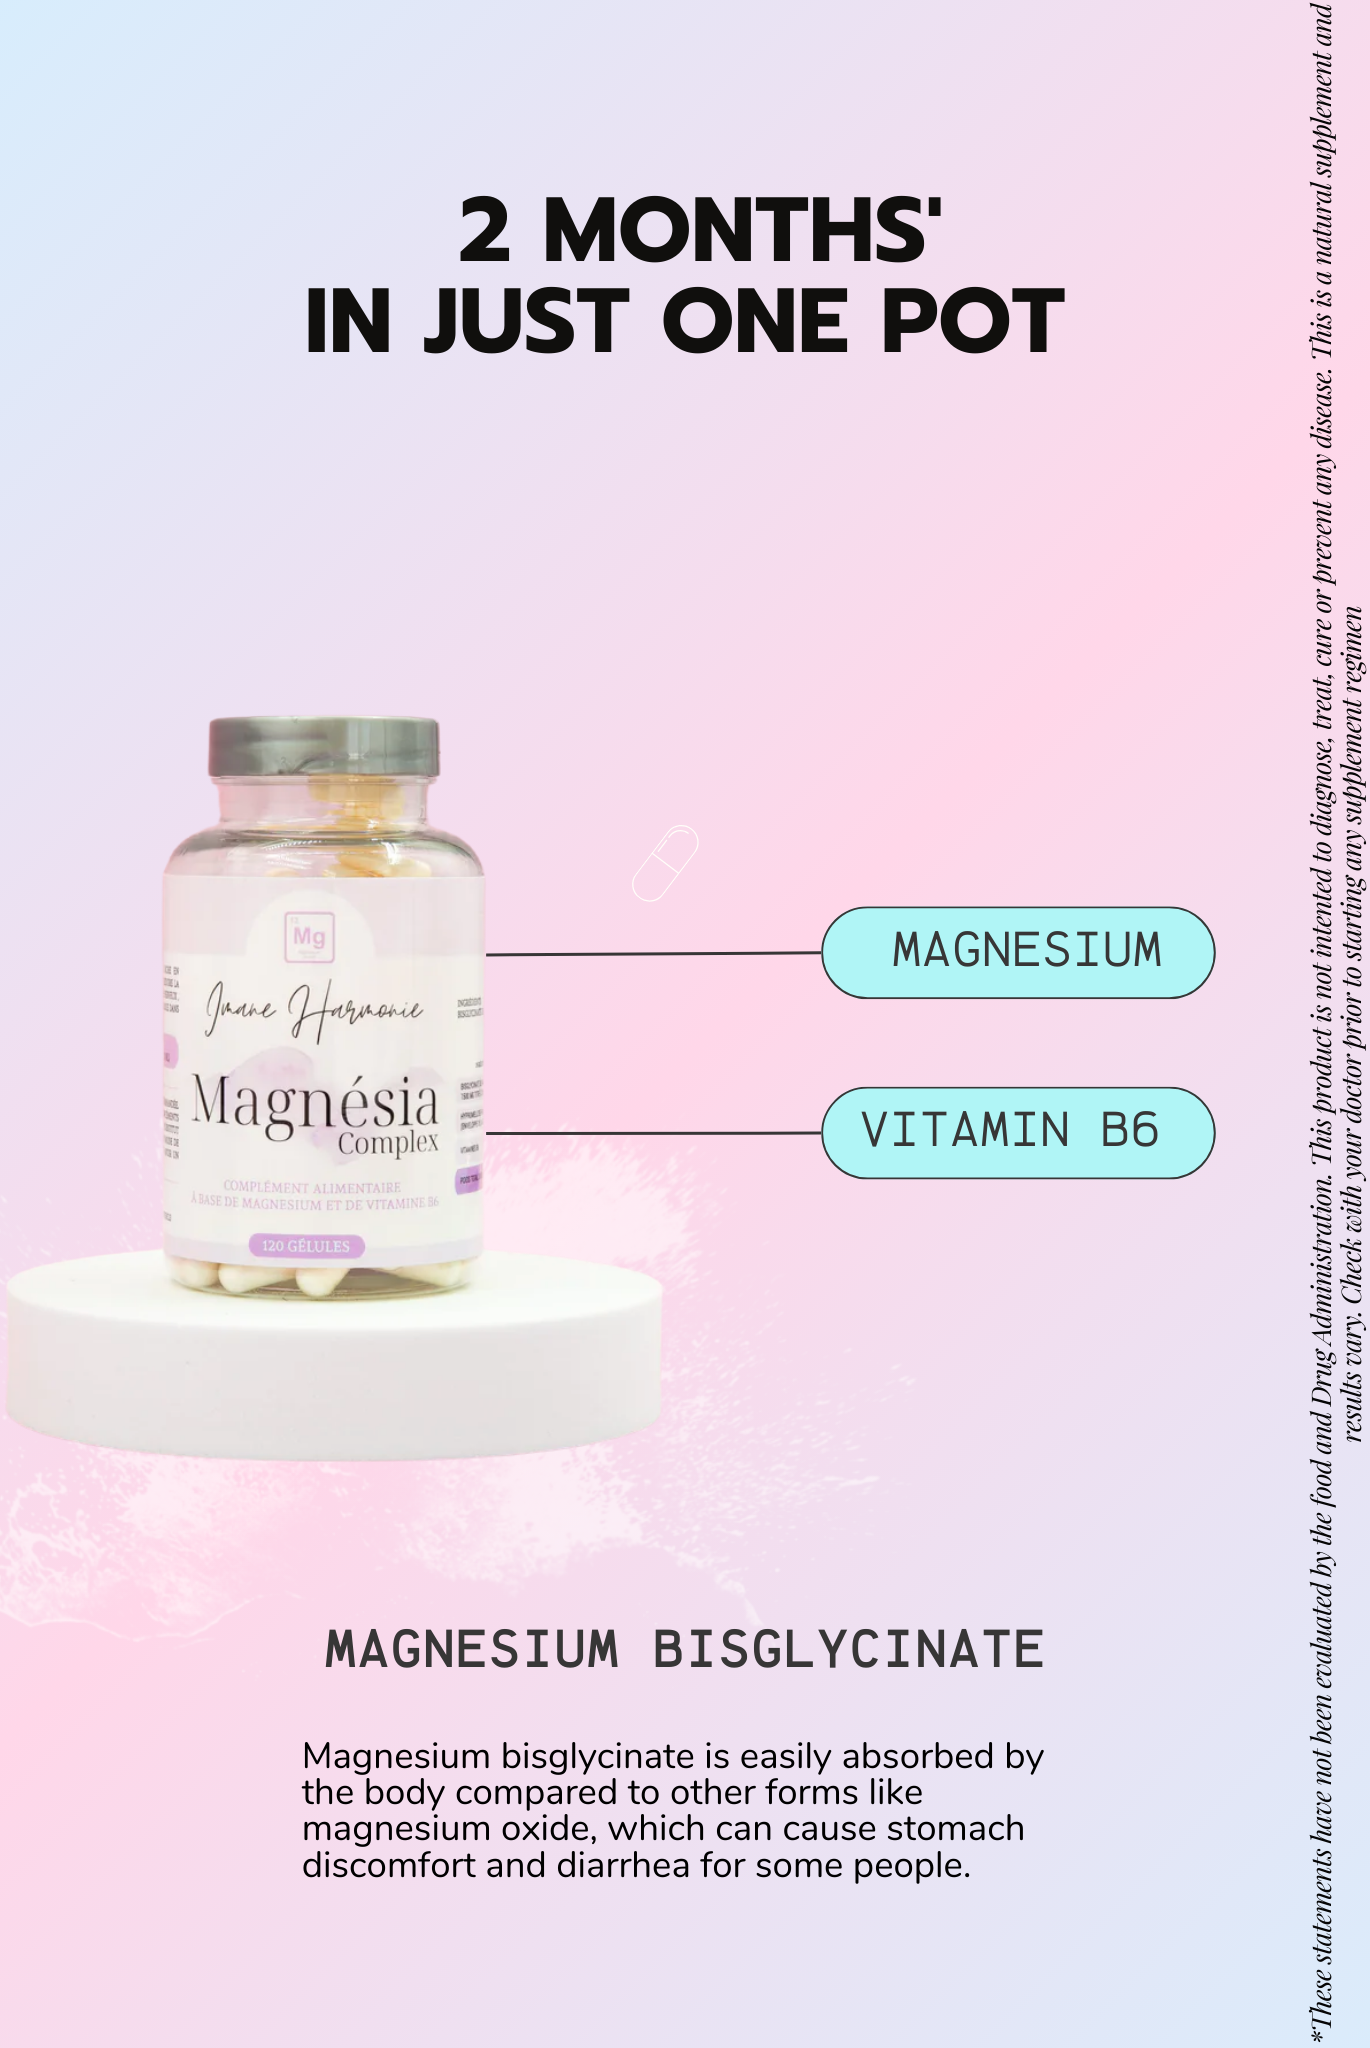 supplements of magnésia complex : magnesium, vitamin B6